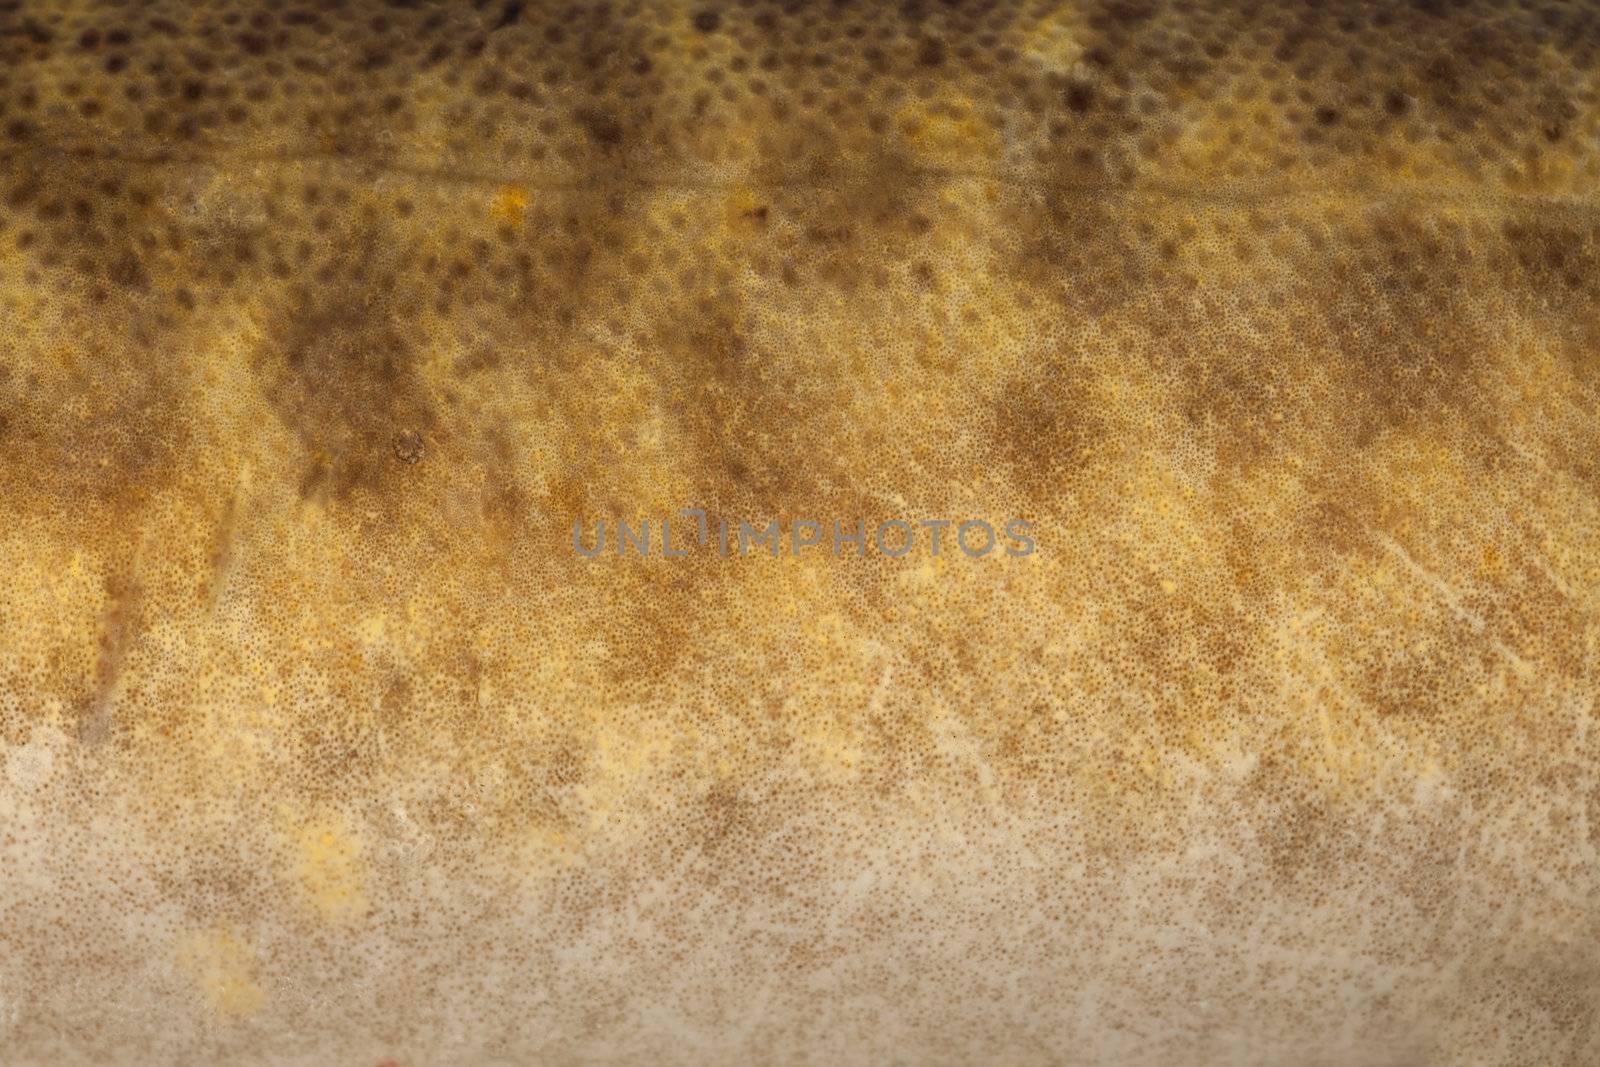 Natural camouflage design of freshwater fish burbot (Lota lota) close-up